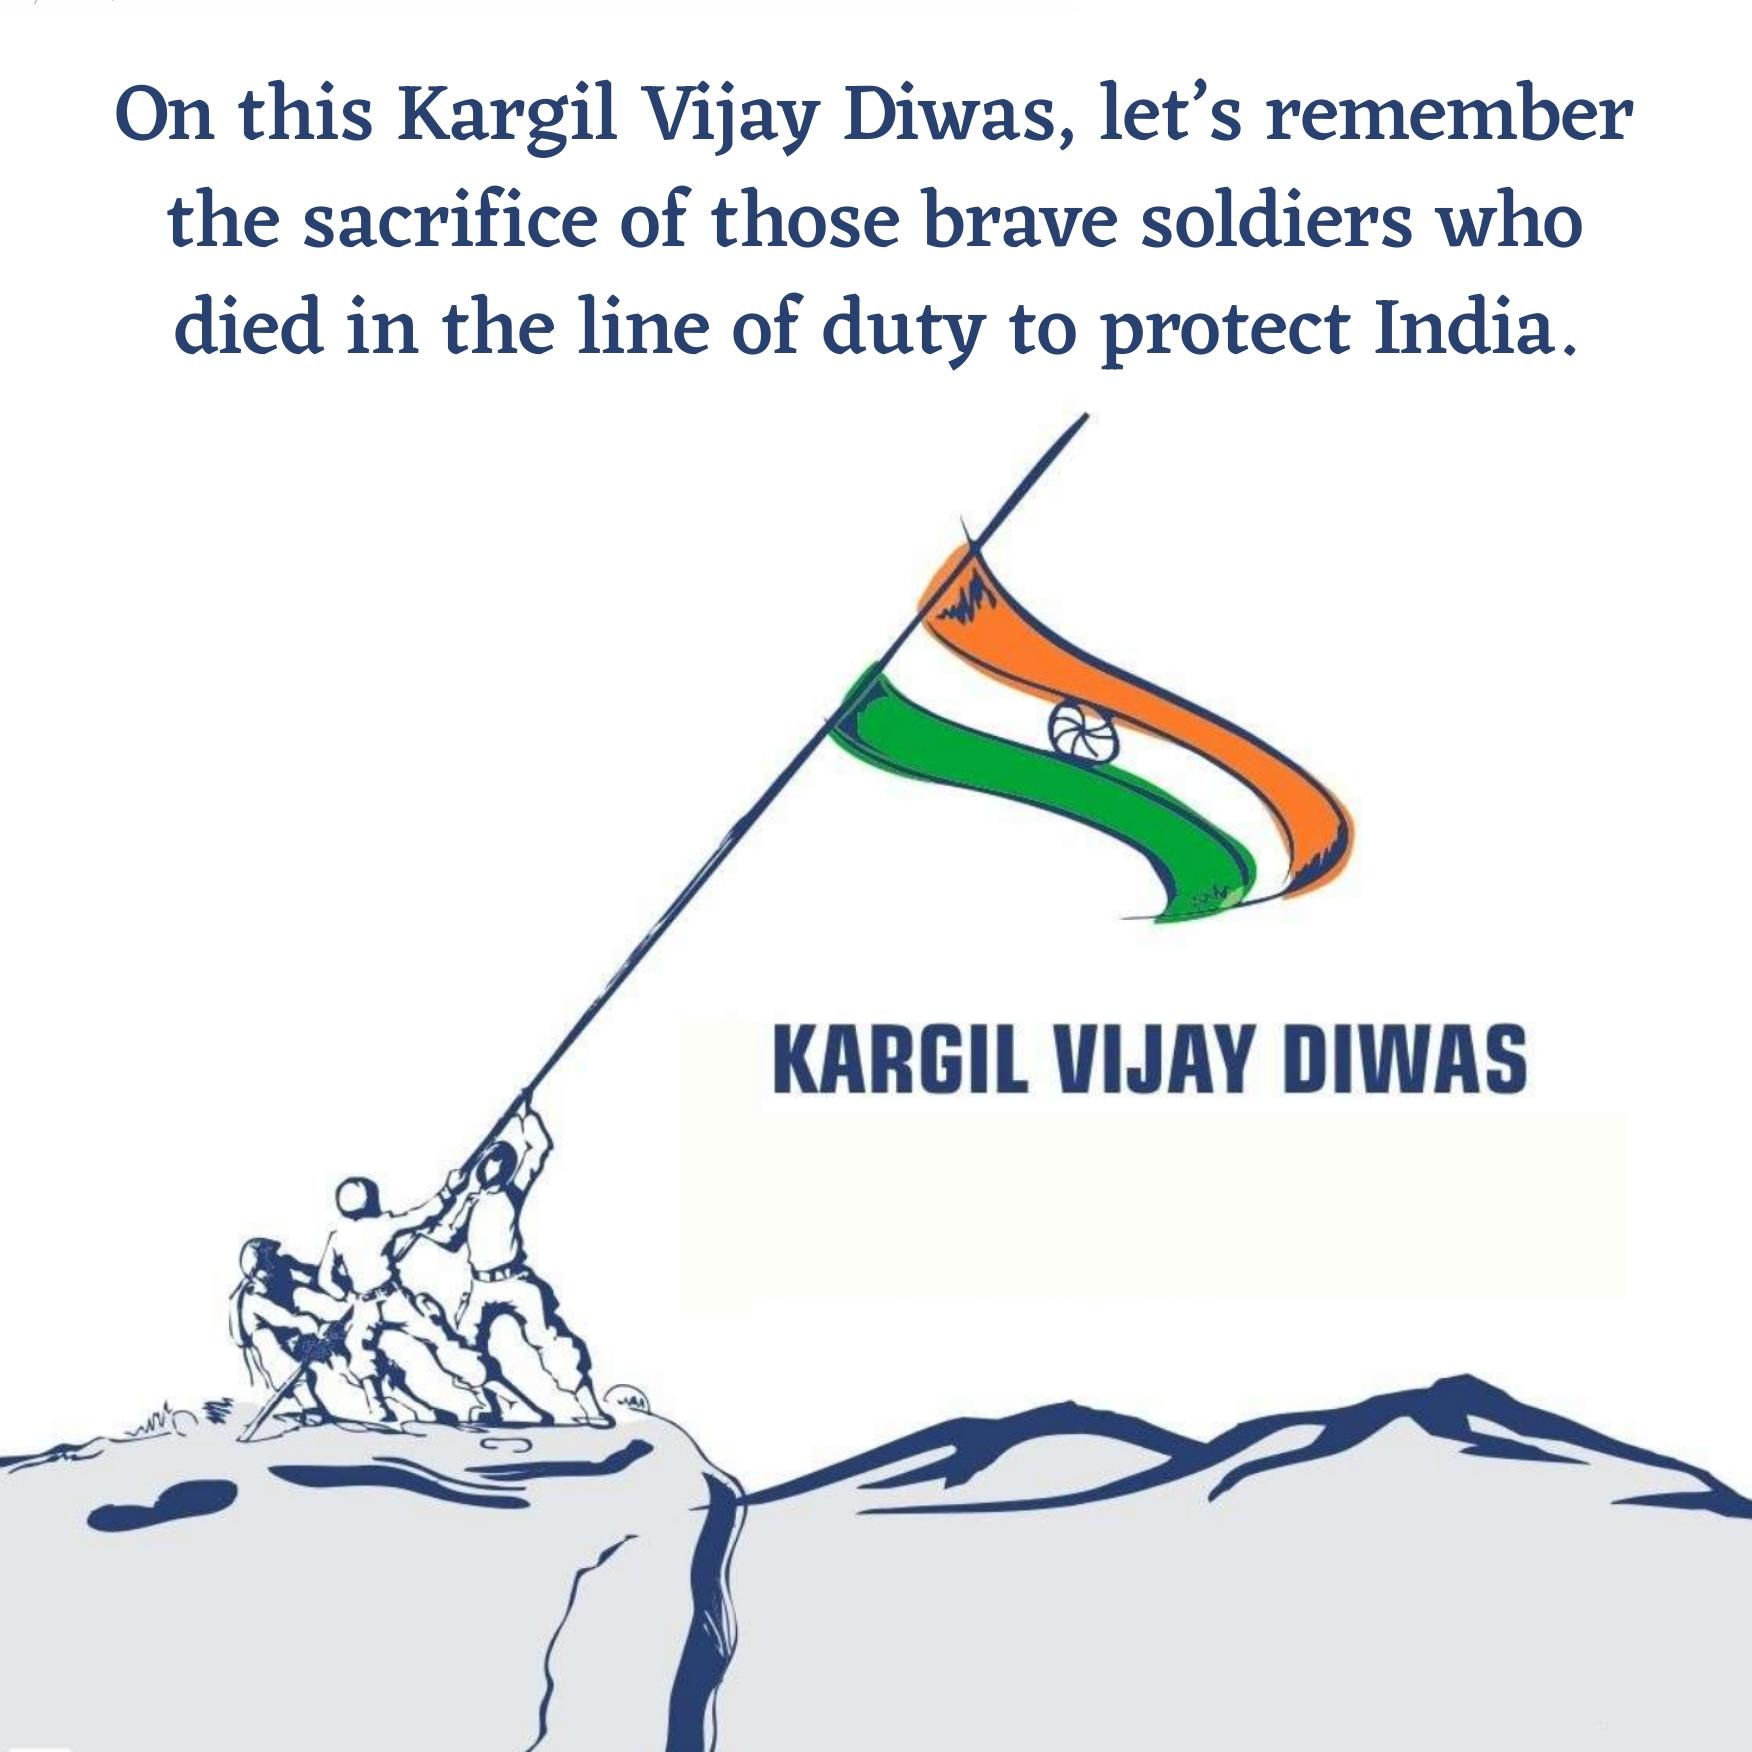 On this Kargil Vijay Diwas lets remember the sacrifice